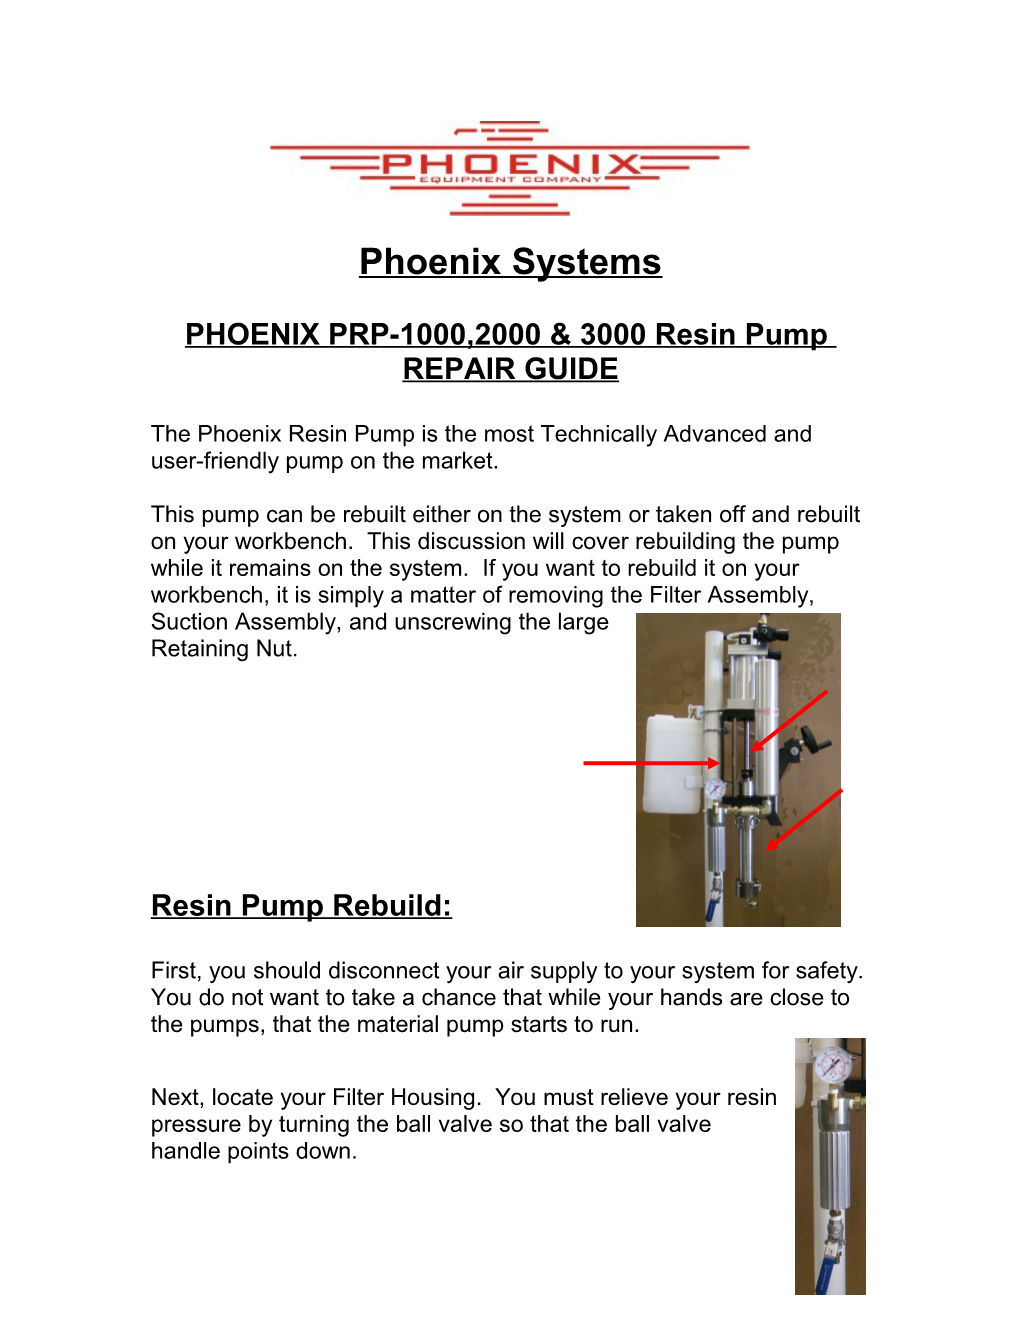 PHOENIX PRP-1000,2000 & 3000 Resin Pump